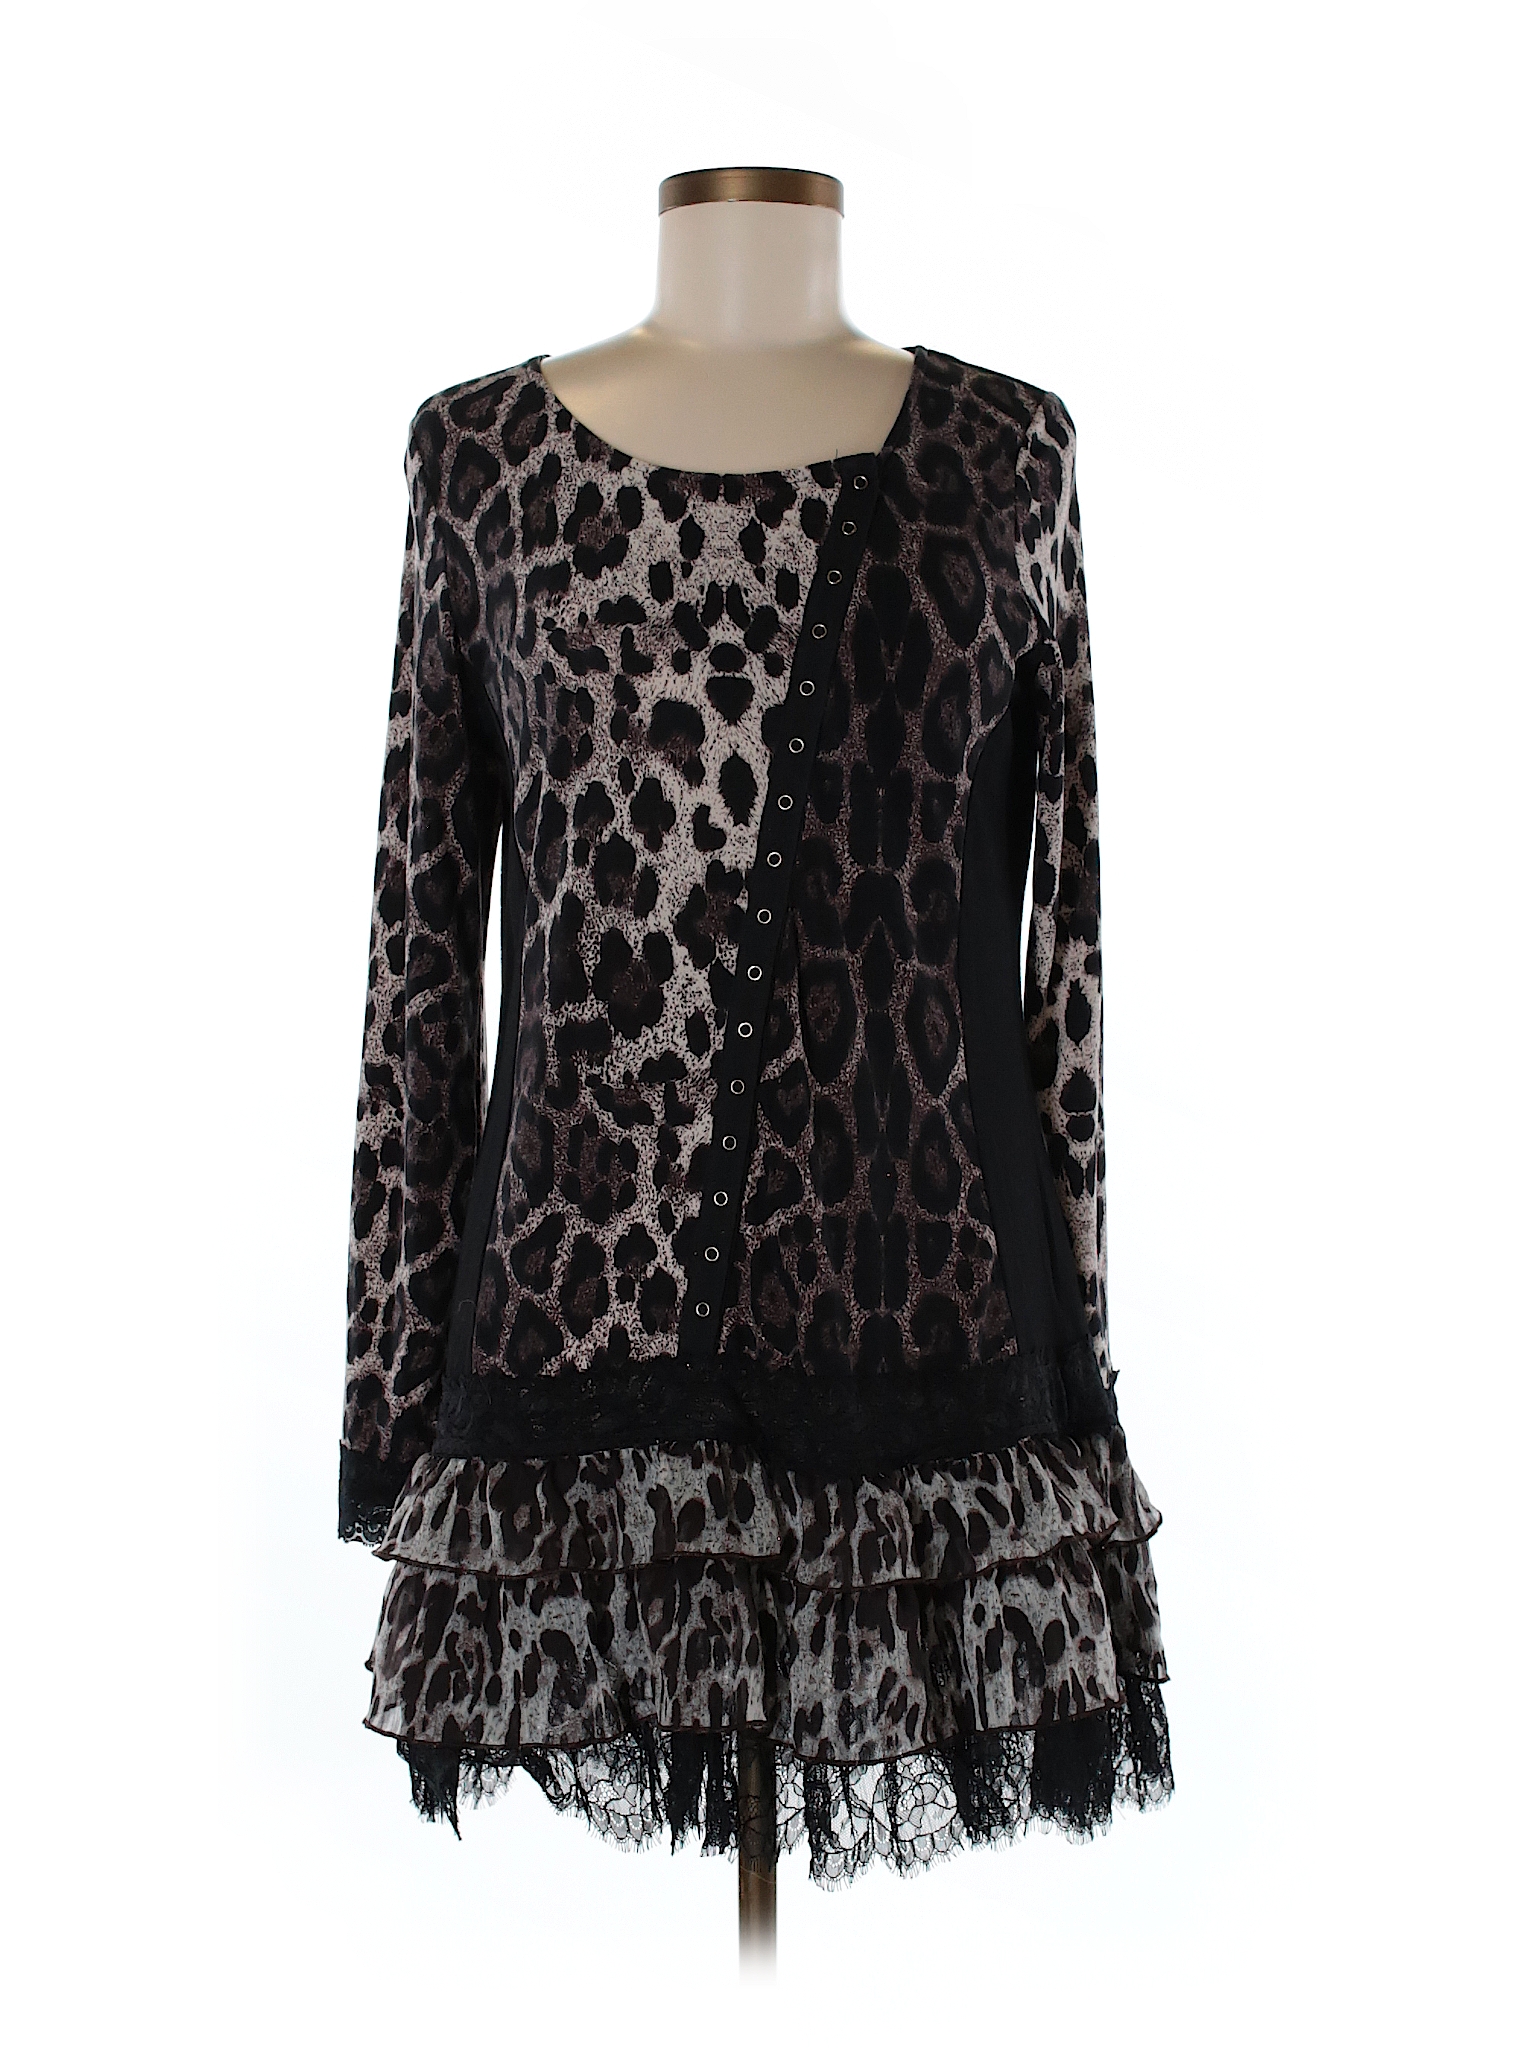 Alison Sheri Animal Print Black Casual Dress Size M - 83% off | thredUP